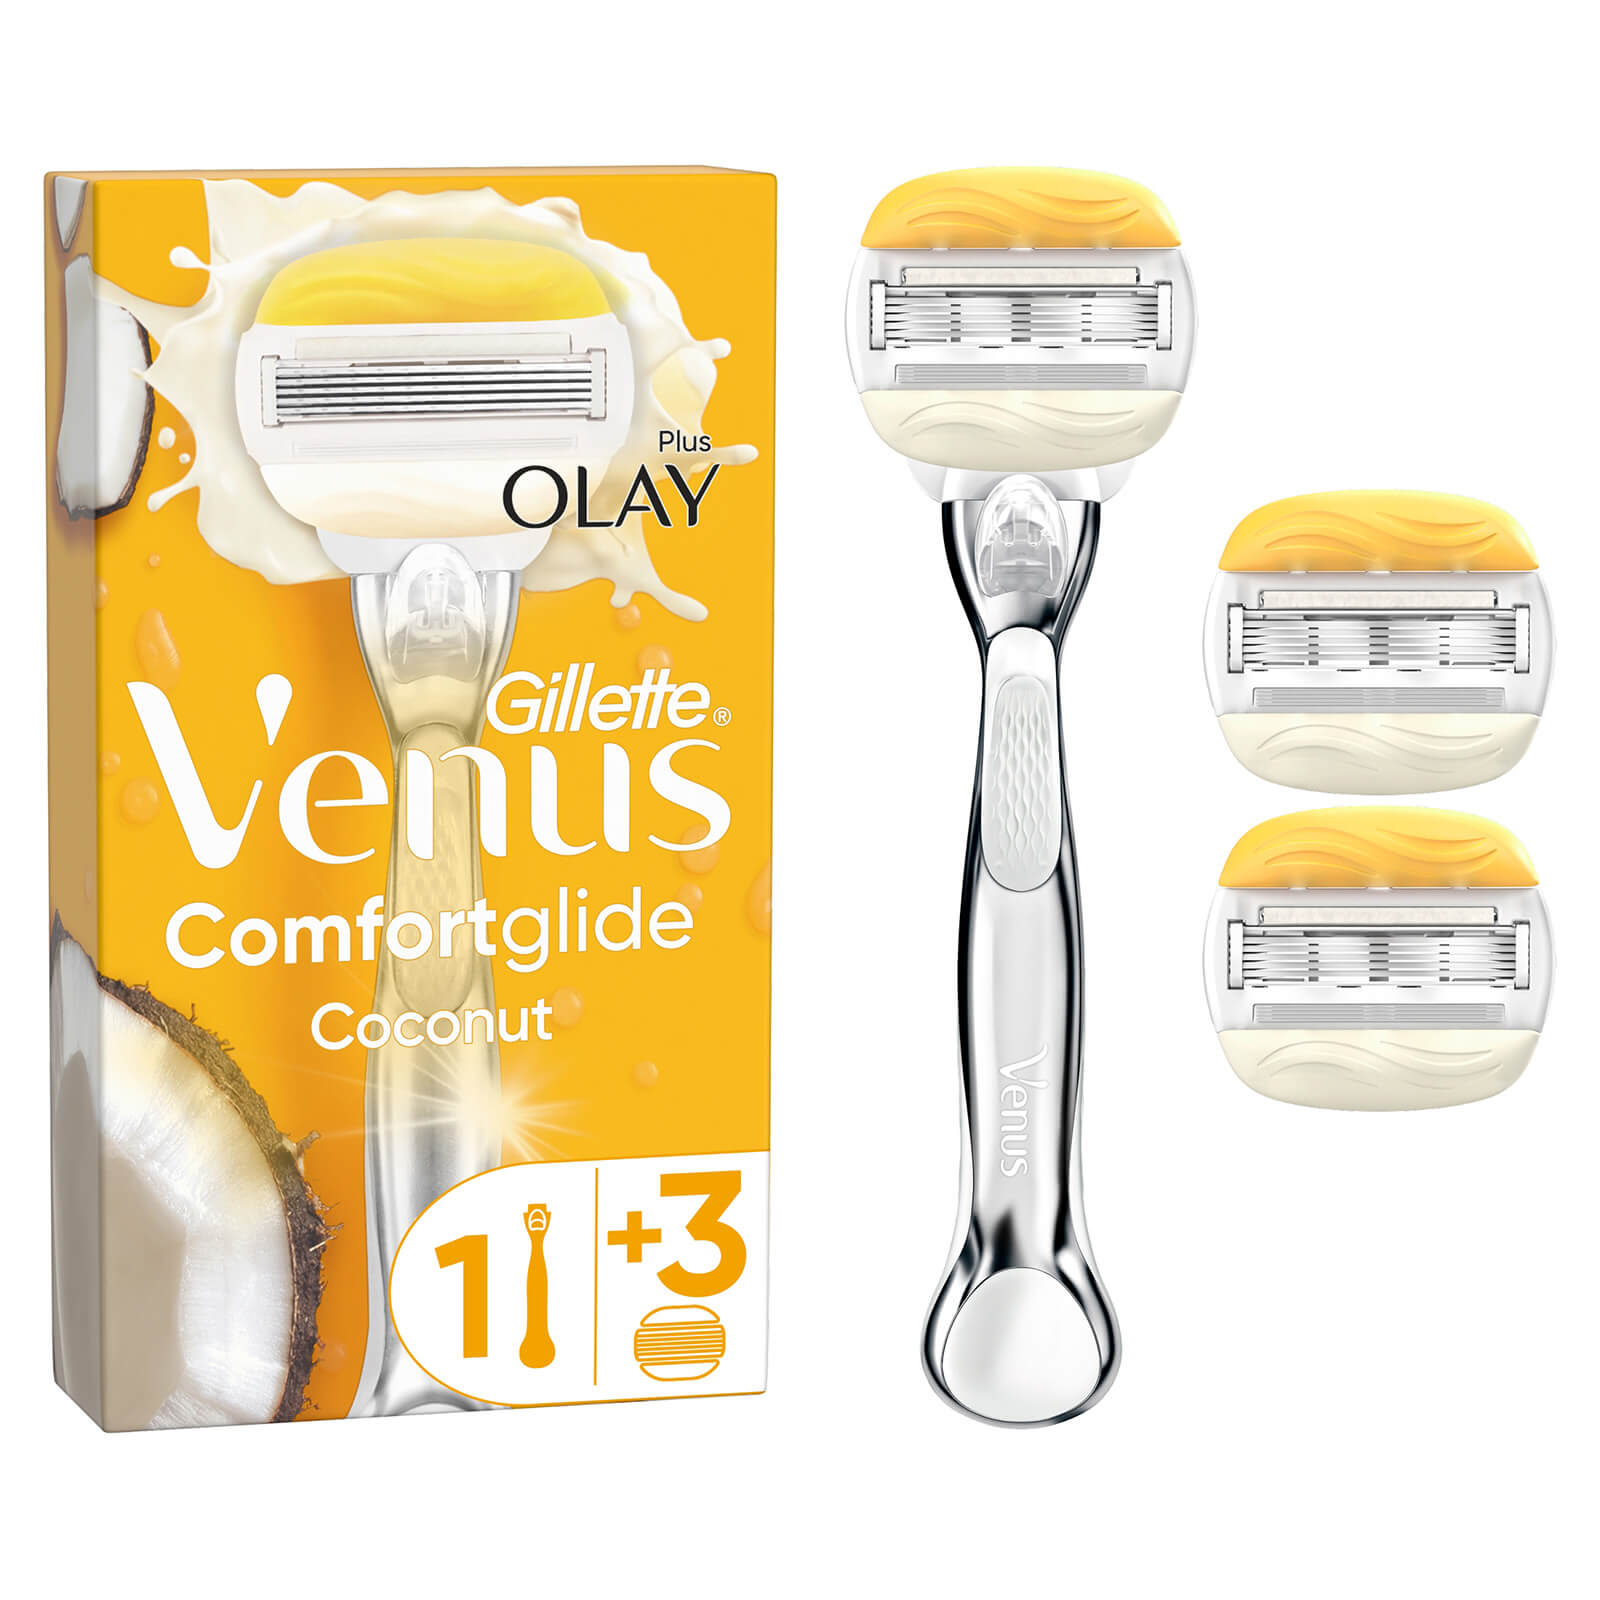 Venus ComfortGlide Coconut with Olay Platinum Razor Starter Pack - Handle + 3 Blades